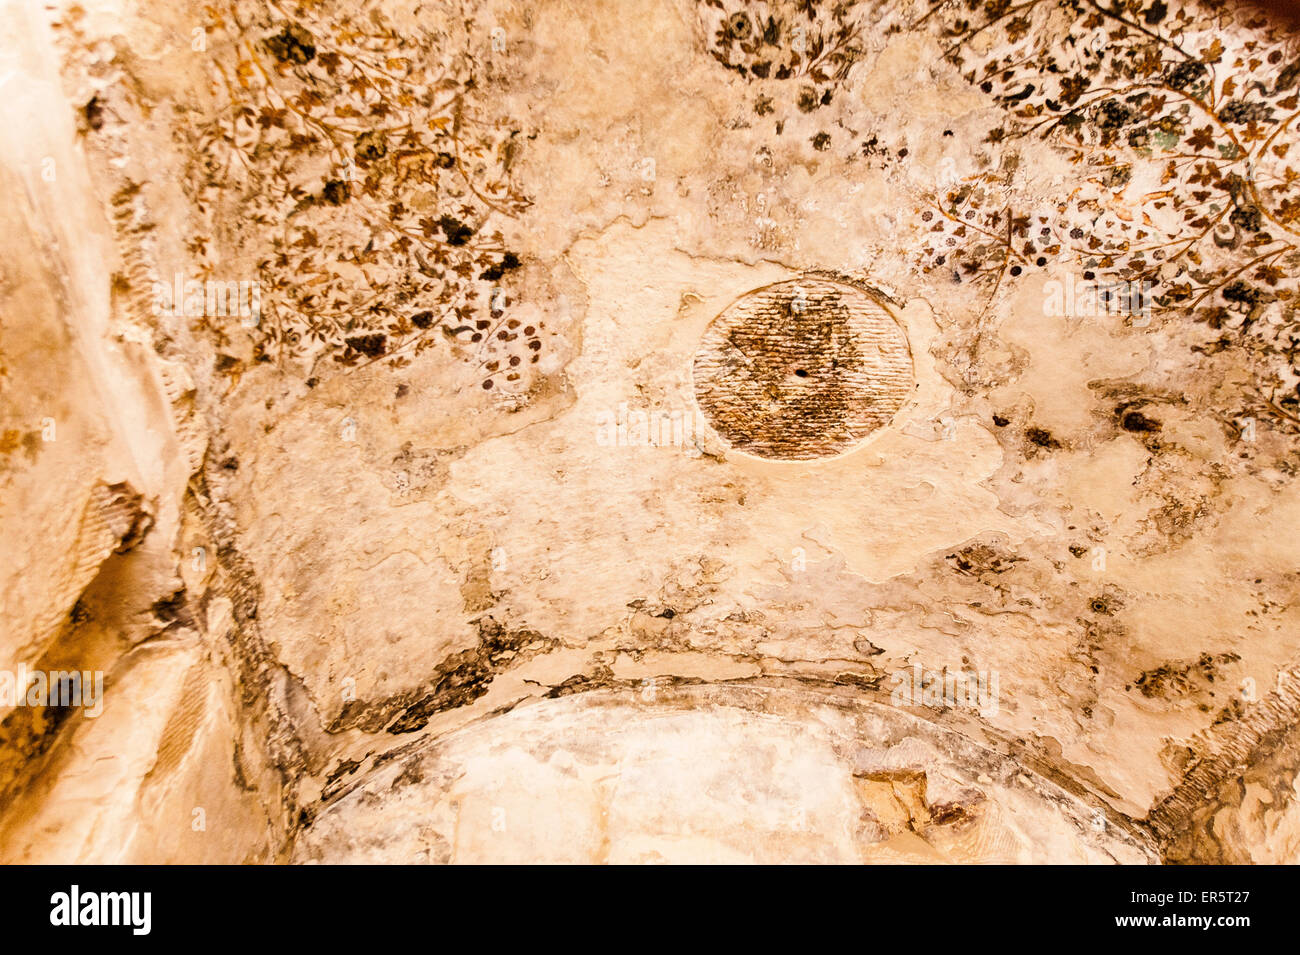 Ceiling fresco inside a biklinium, Siq el-Barid, Little Petra, Wadi Musa, Jordan, Middle East Stock Photo